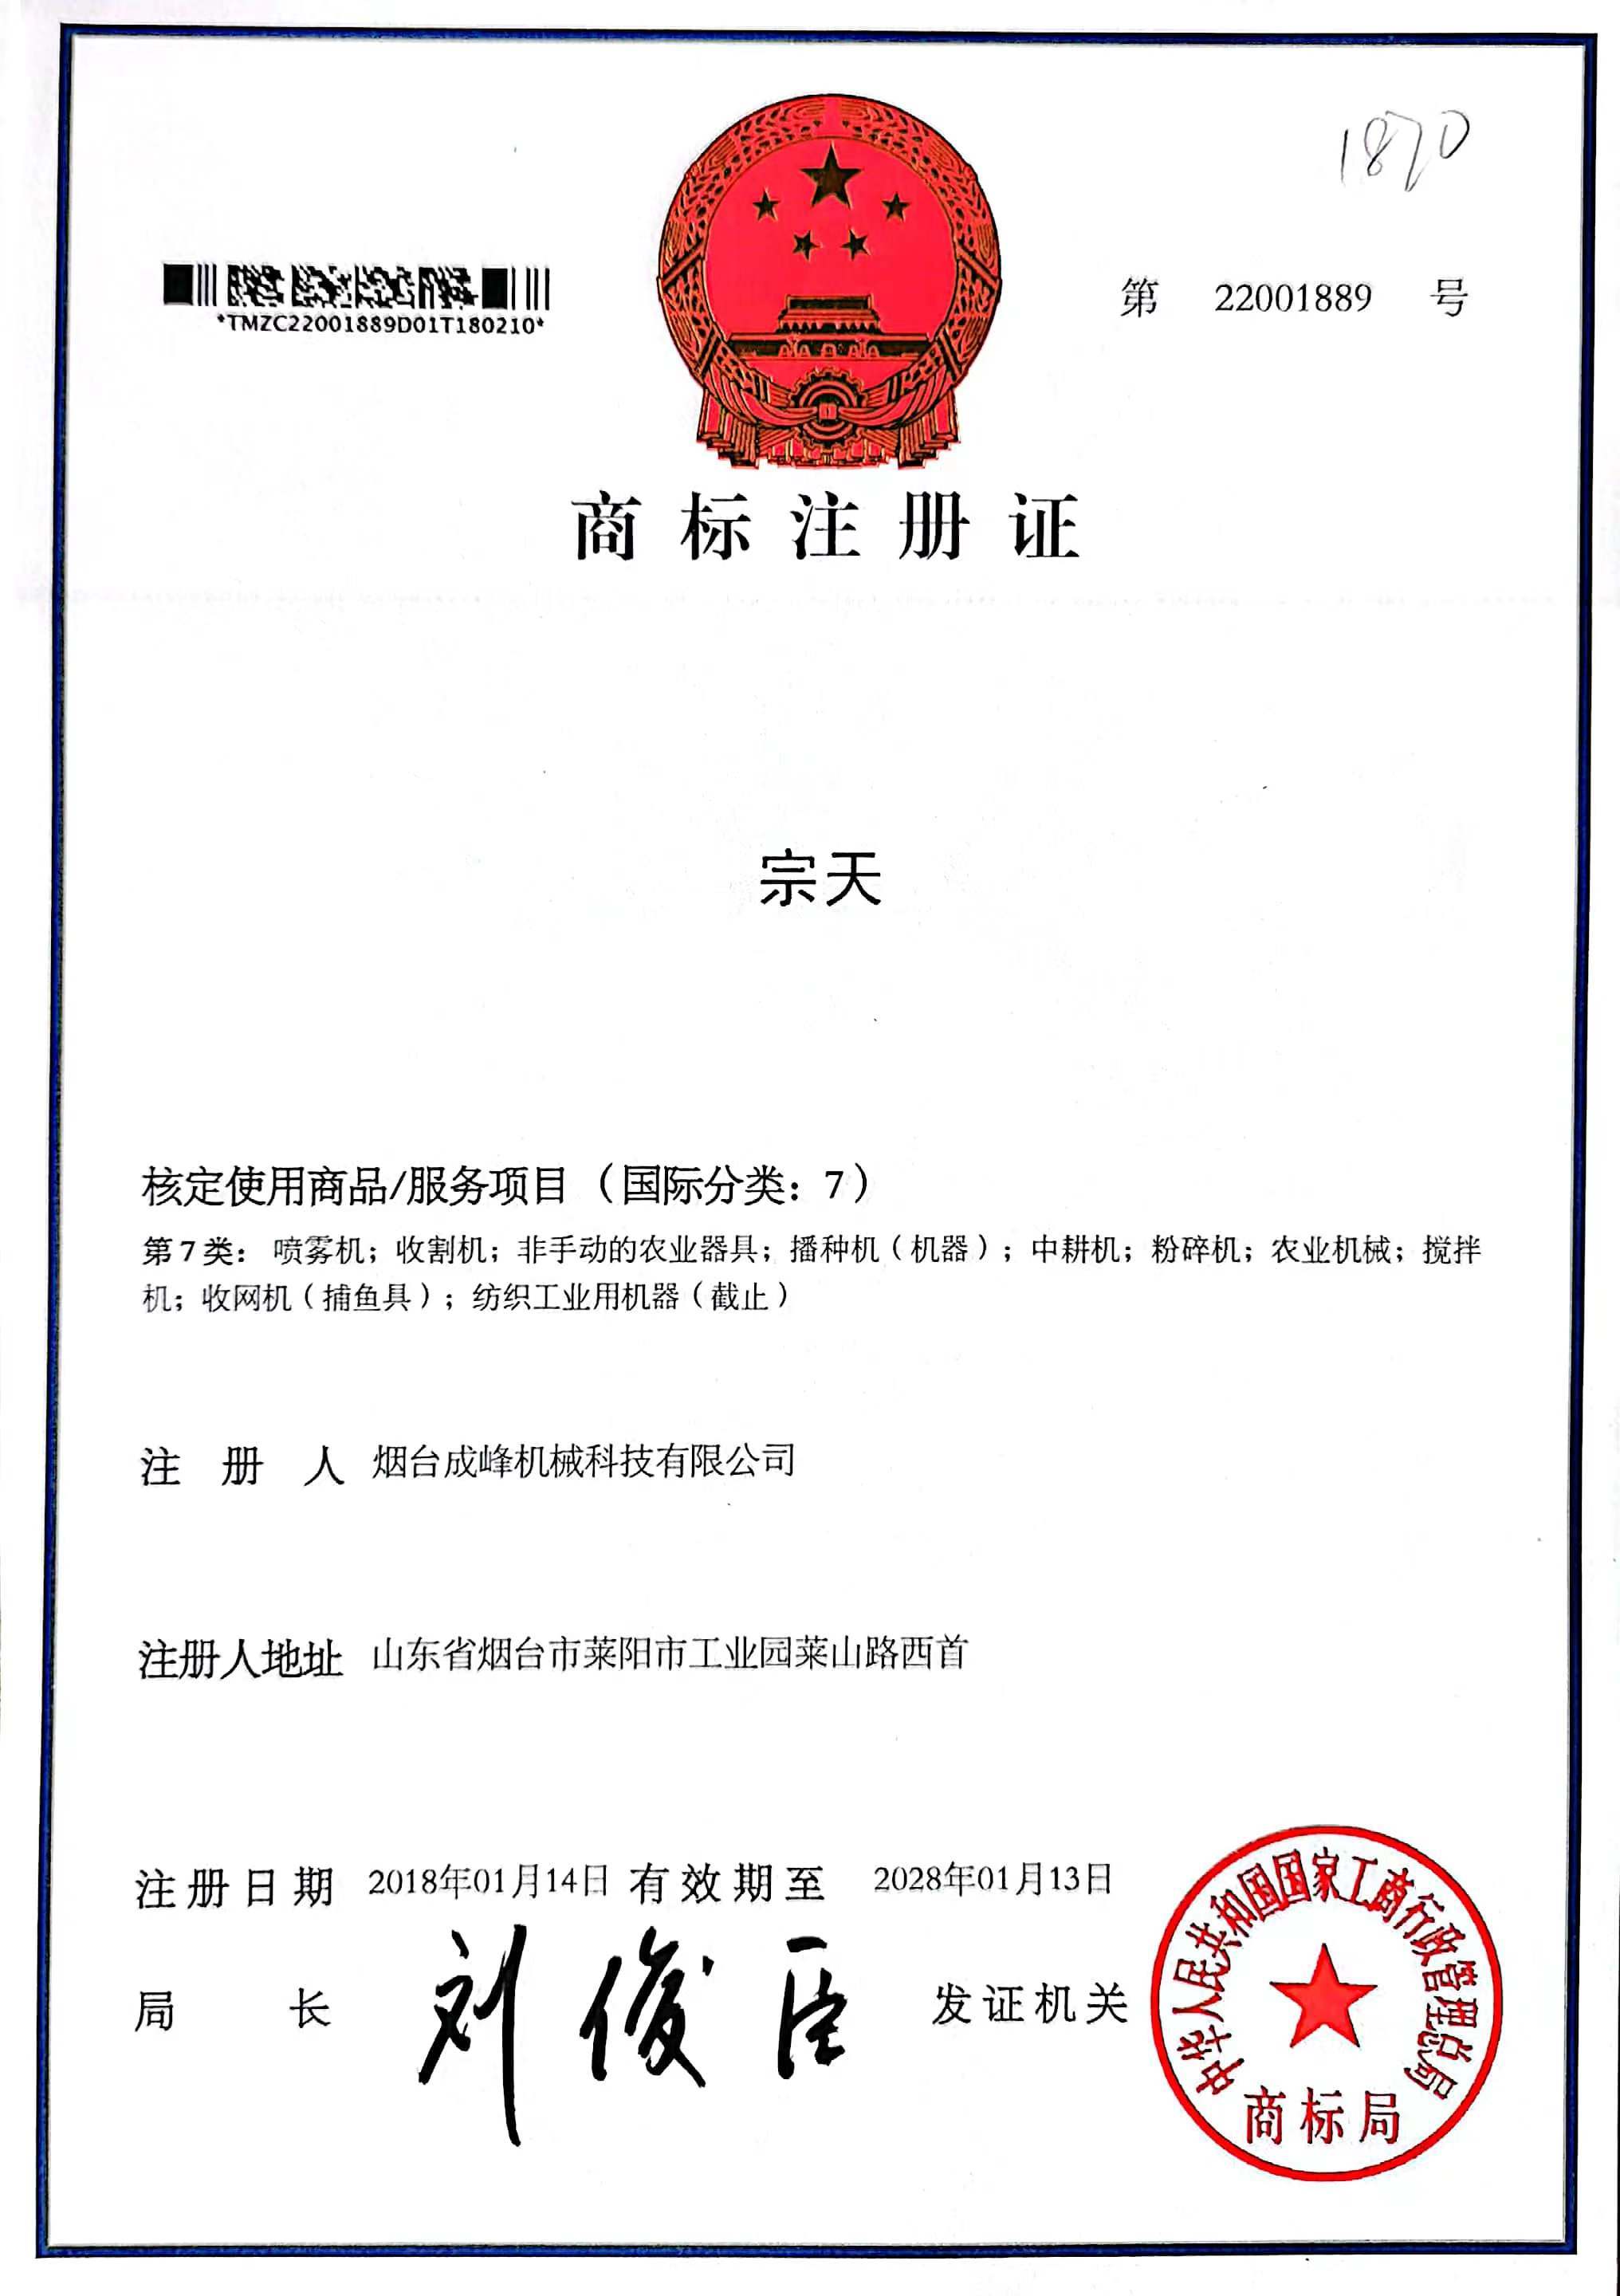 Trademark registration certificate 1 1